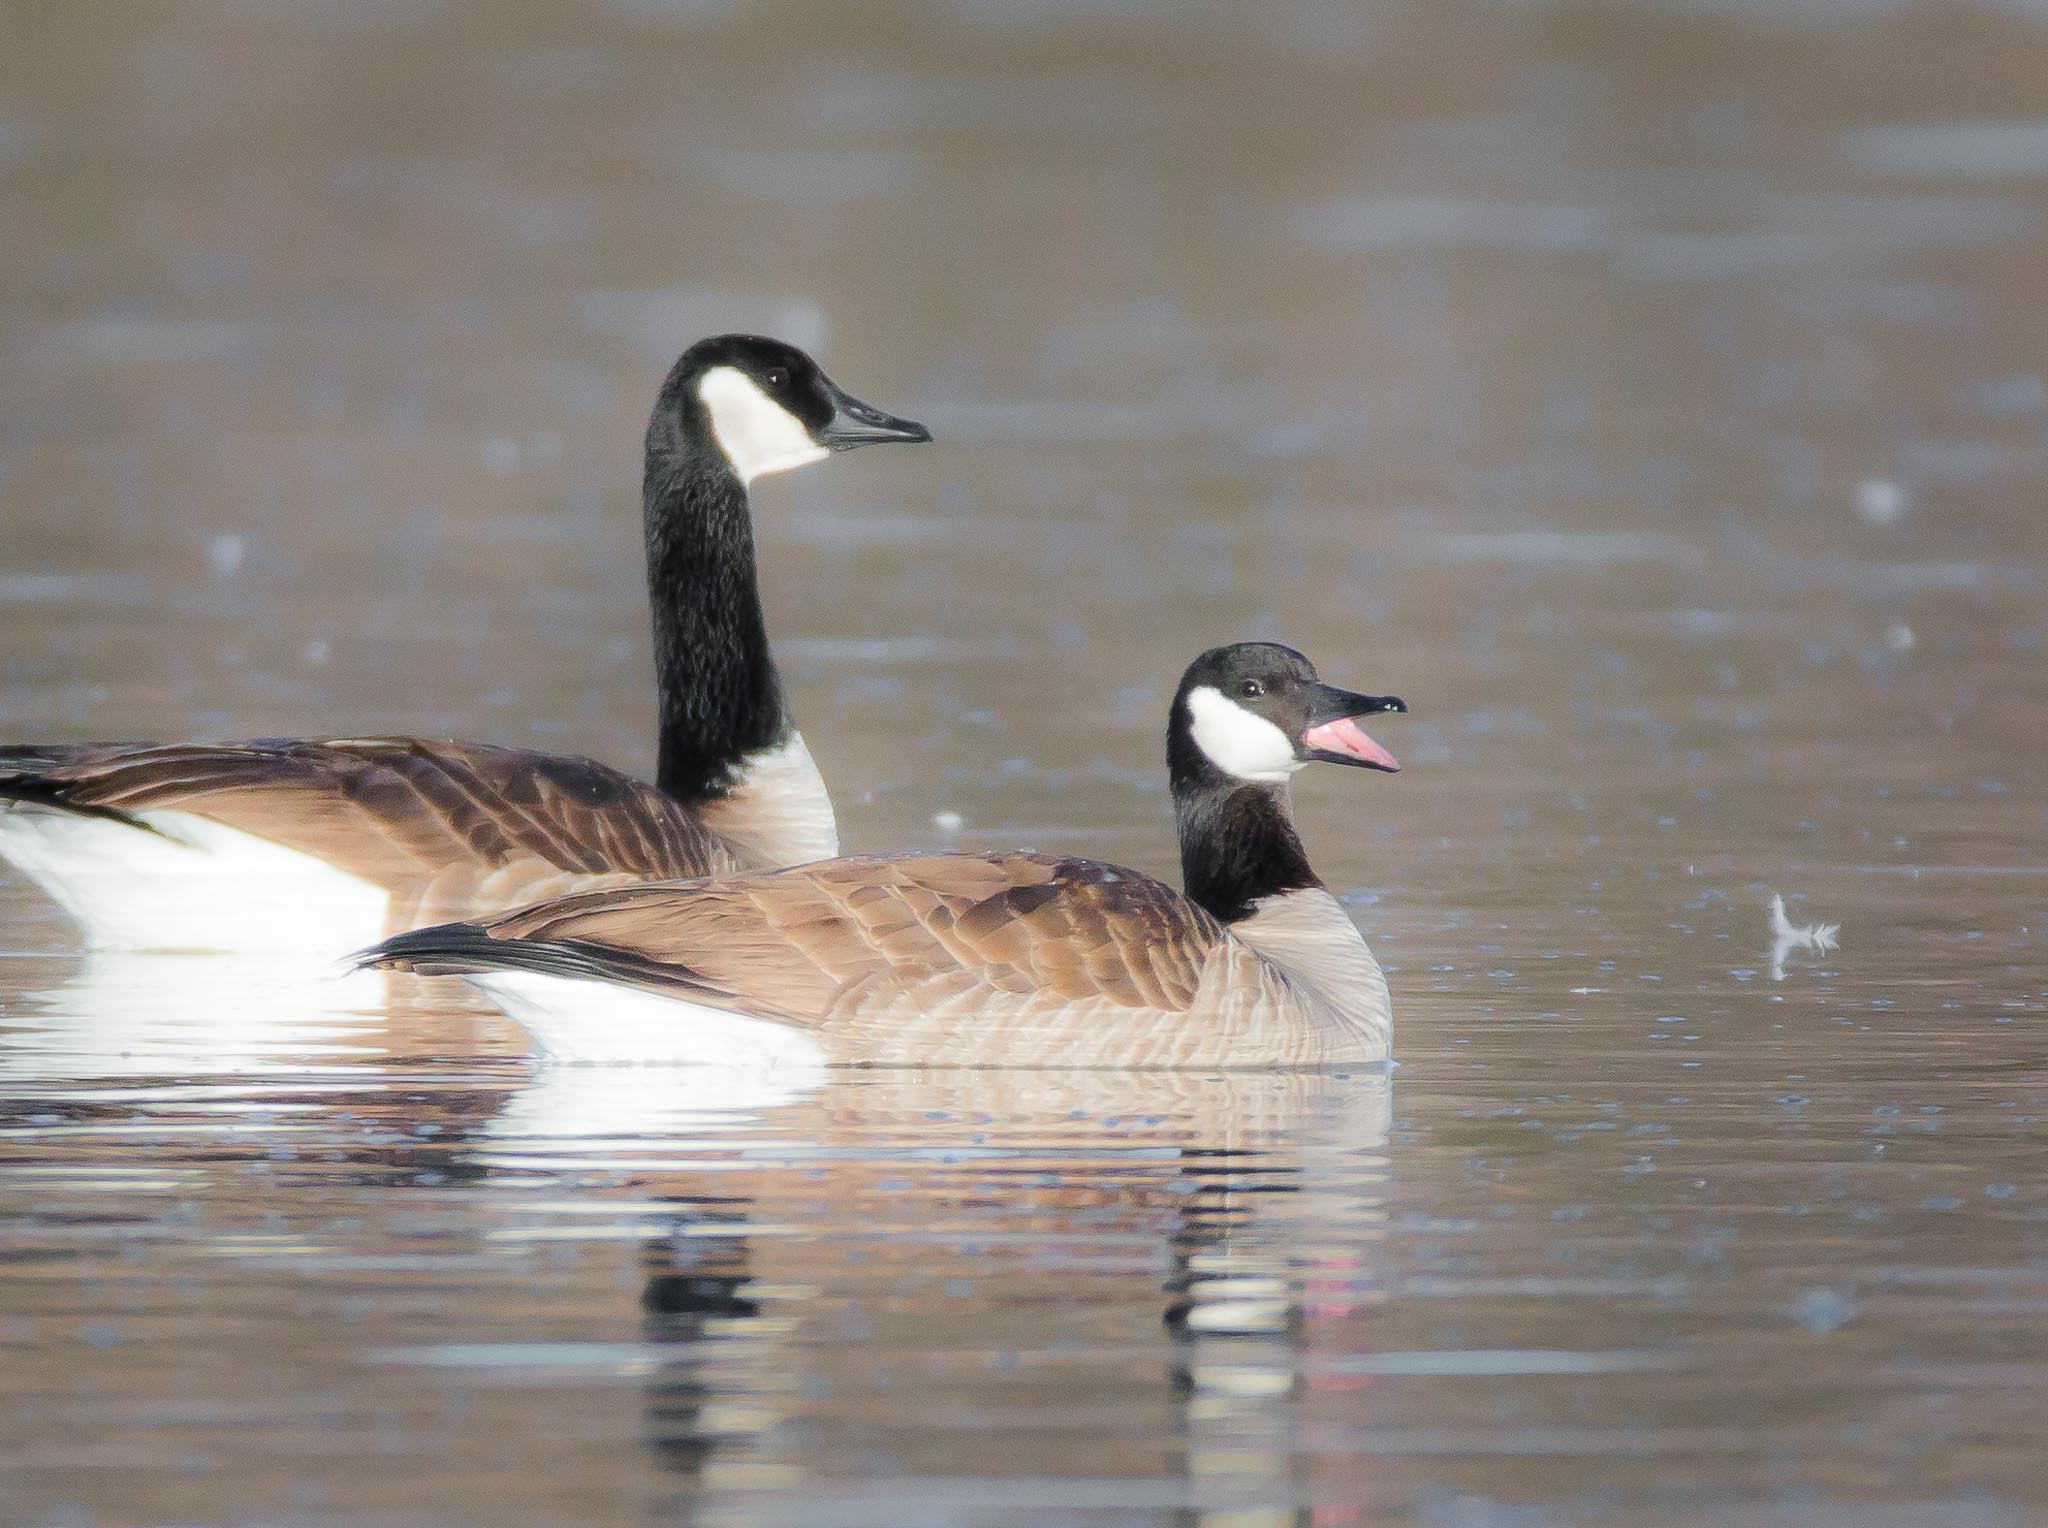 Swimming Canada Geese, Bosque del Apache National Wildlife Refuge, San Antonio NM, January 20, 2015